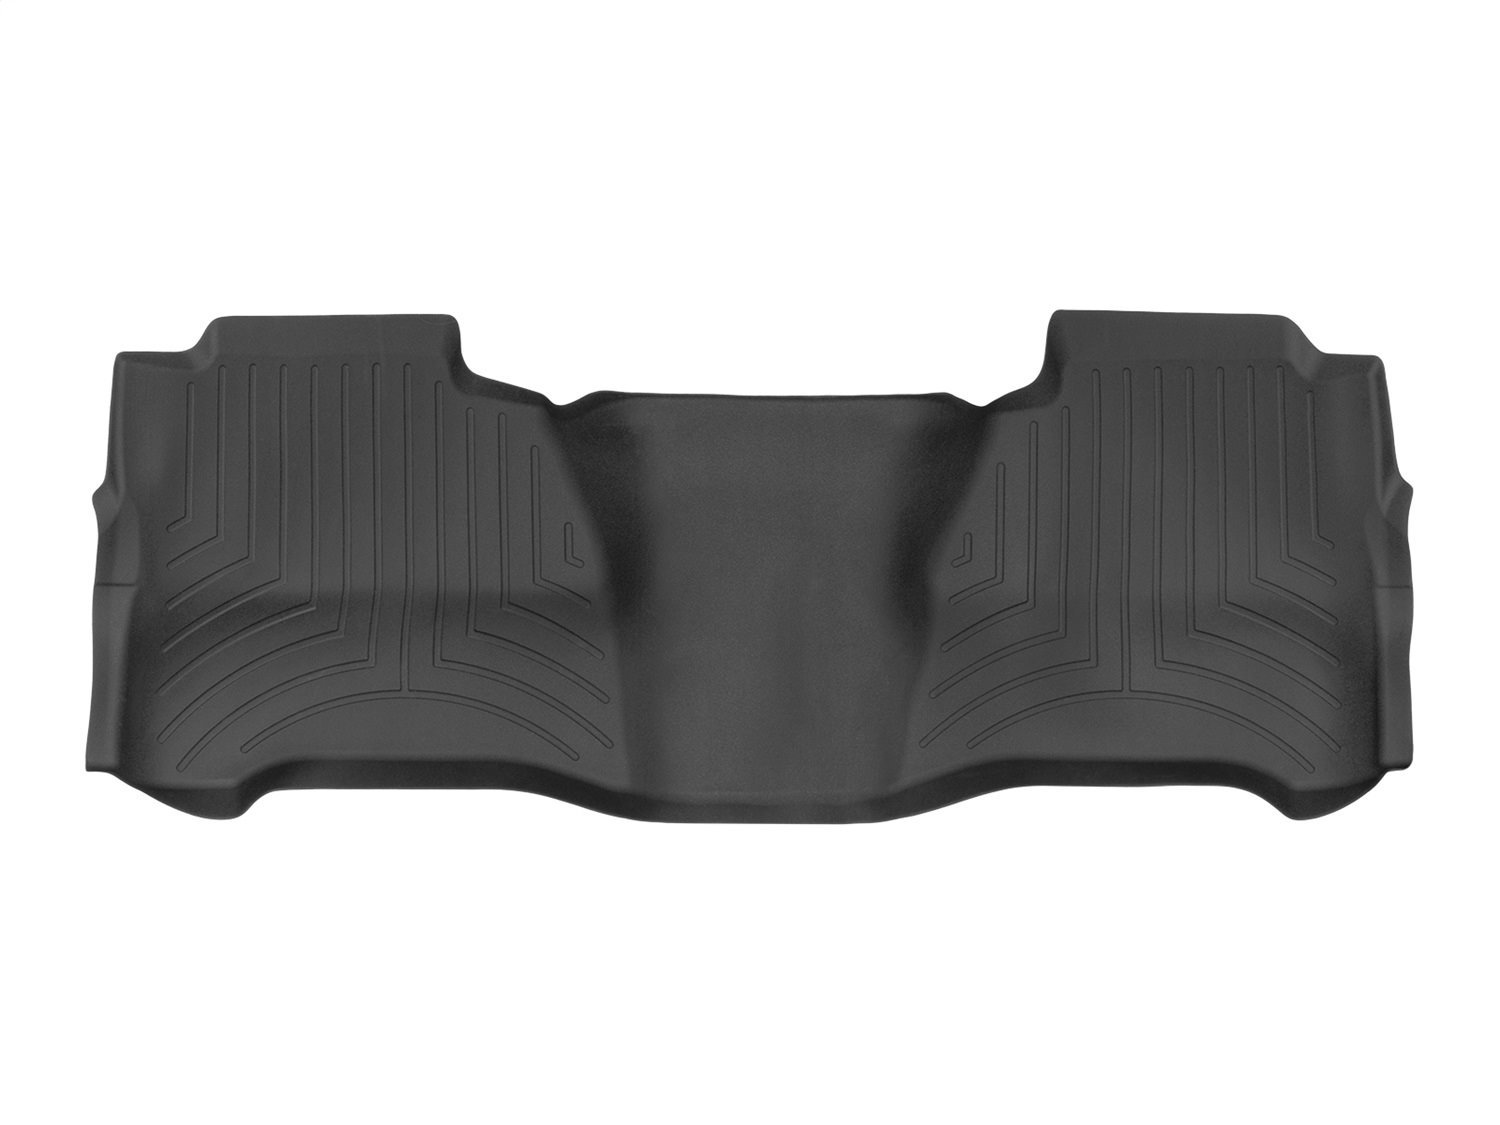 REAR FLOORLINER BLACK CHEVROLET SILVERADO 1500 2014-2015 FITS WITH OEM REAR UNDER SEAT STORAGE